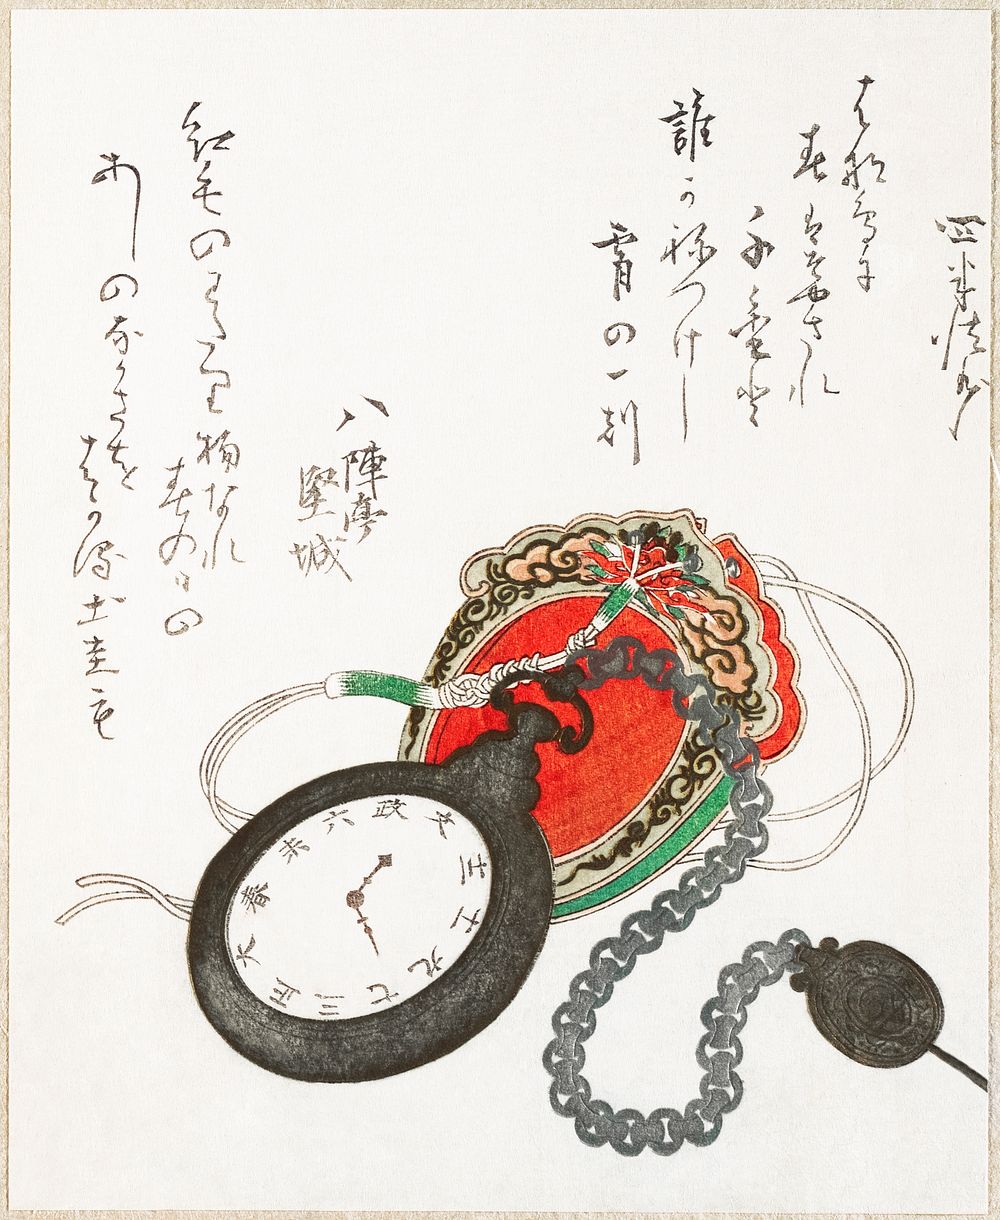 Western Pocket Watch From the Spring Rain Collection (Harusame shū), vol. 3 (1823) by Utagawa Hiroshige. Original public…